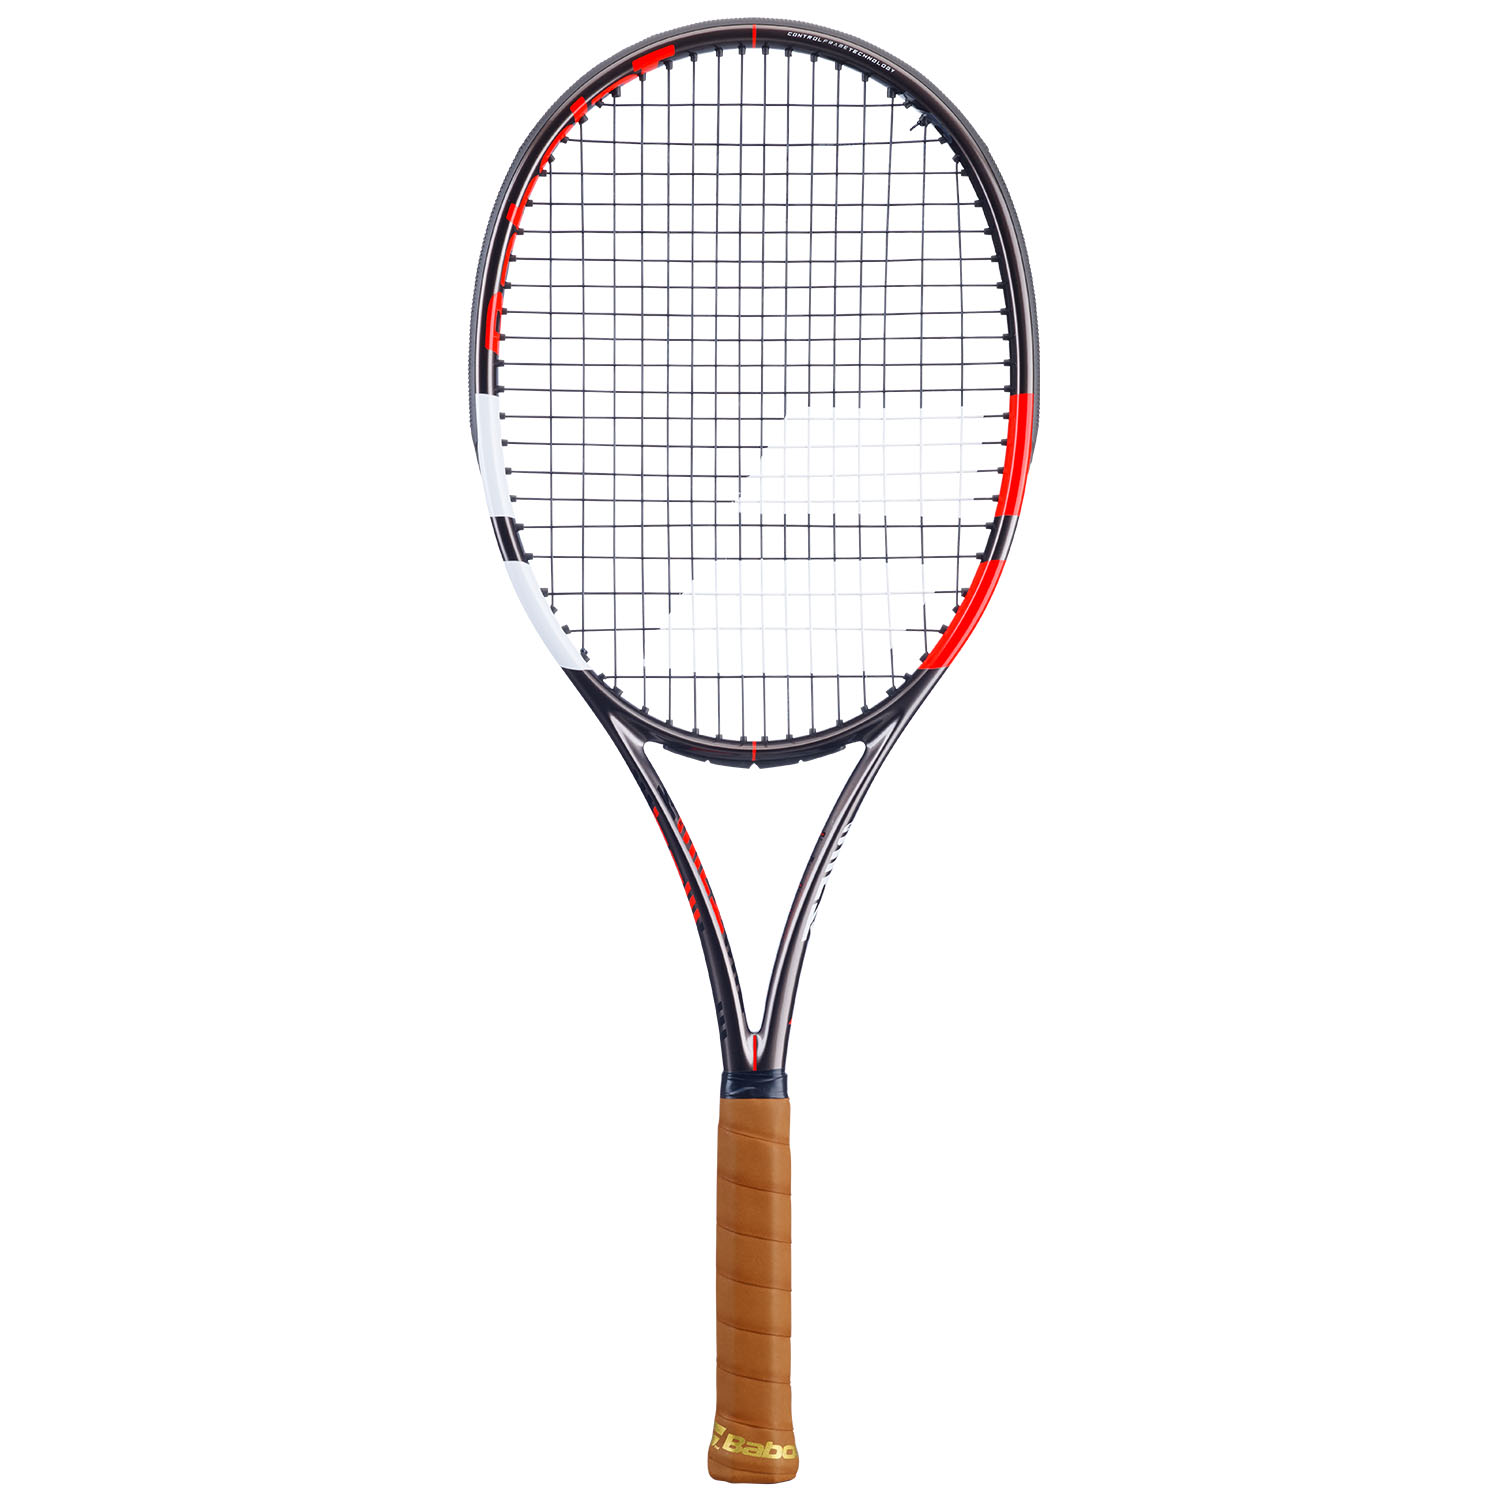 Babolat Pure Strike Super Lite unbesaitet unstrung Tennis Racquet 